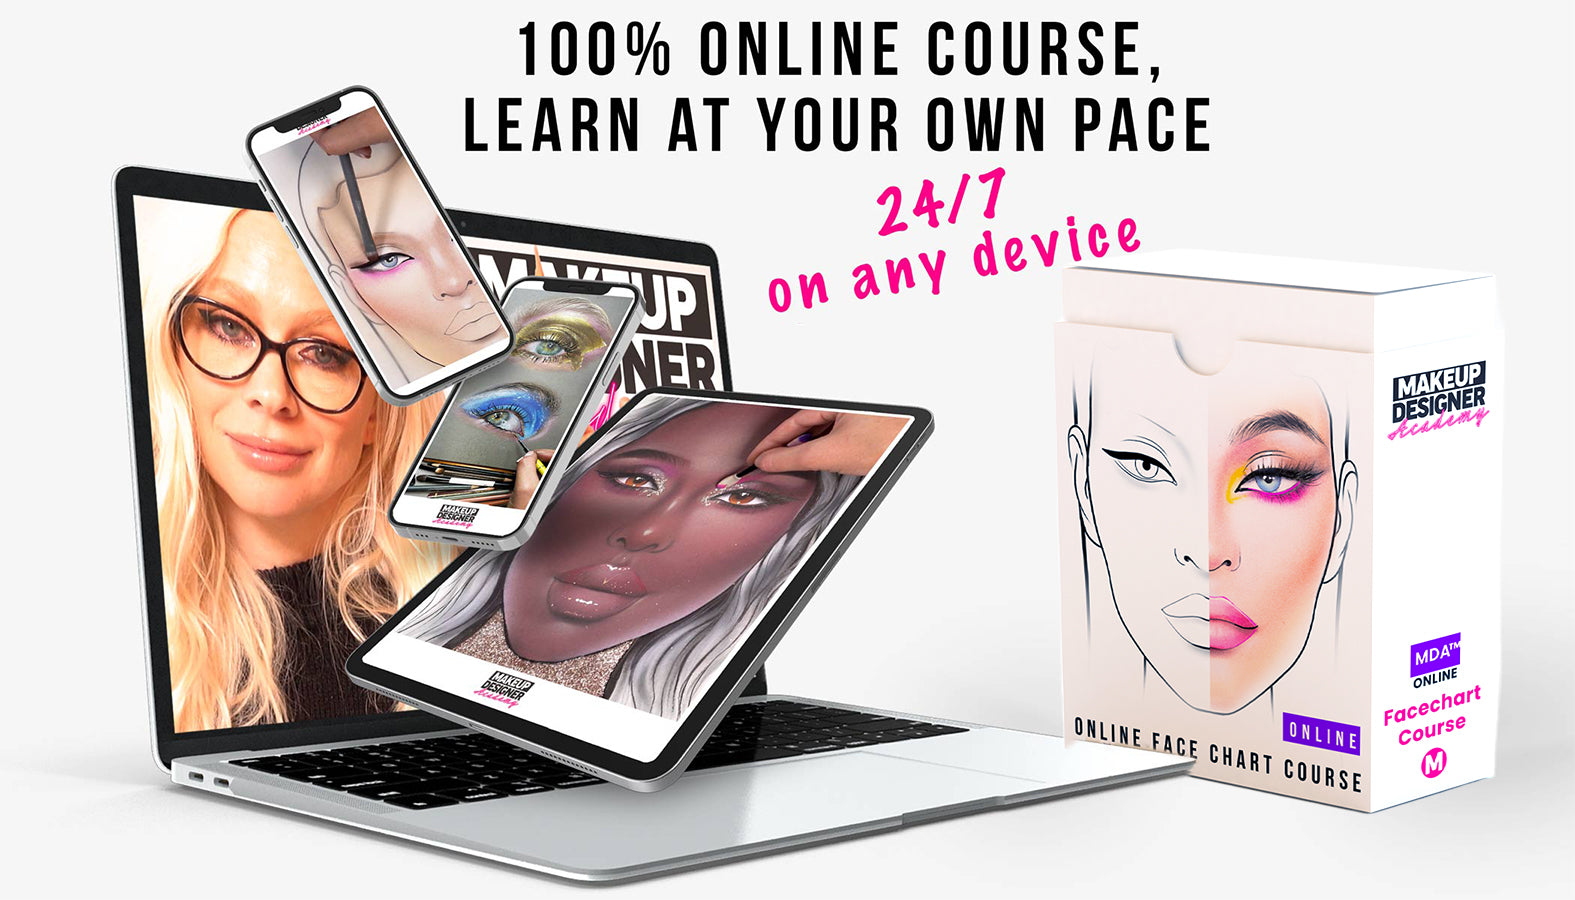 Online FACE CHART Course (MDA™)